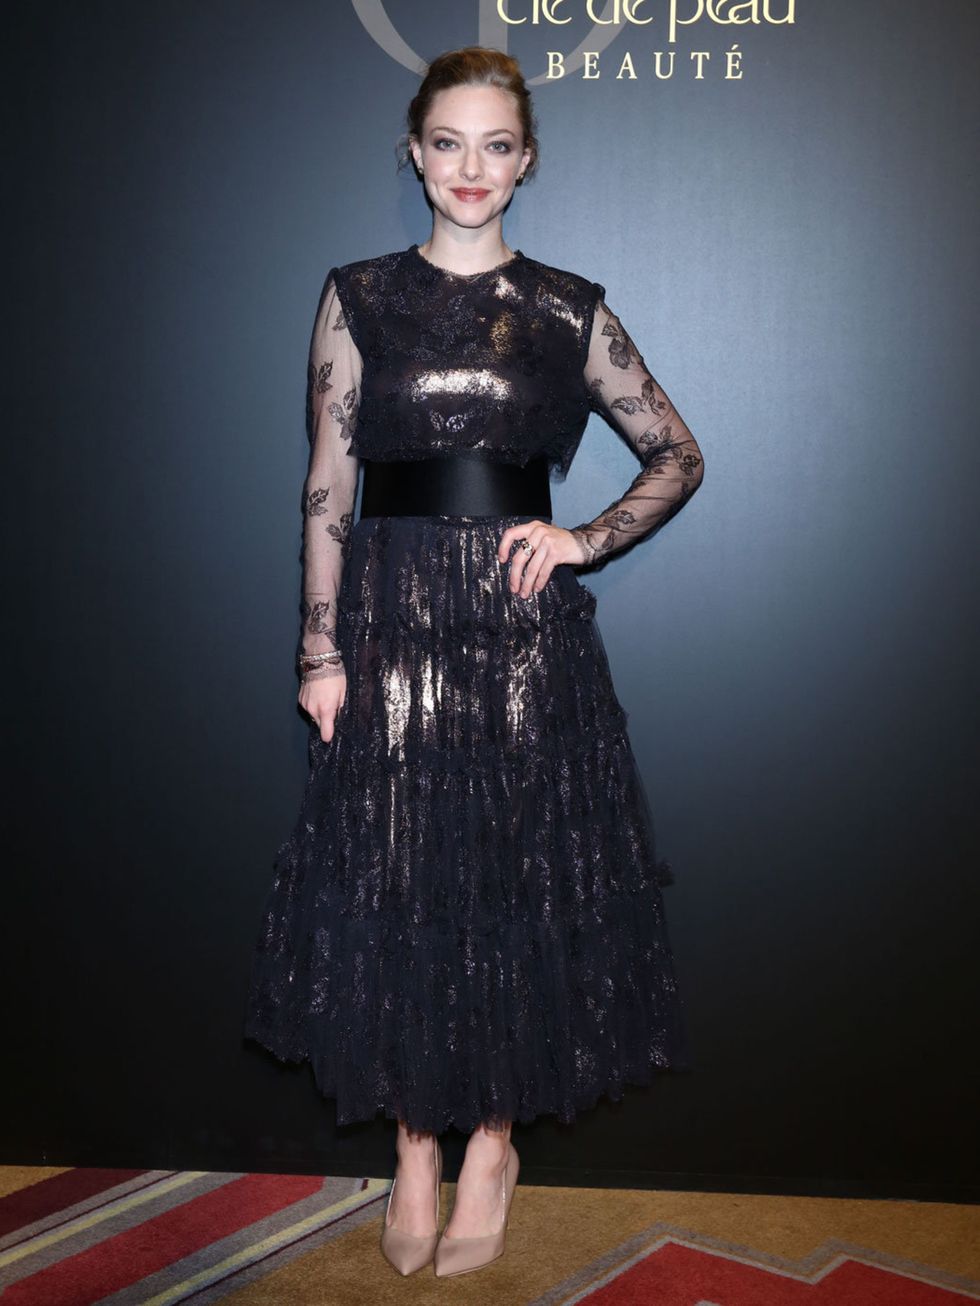 <p>Amanda Seyfried attends 'Cle de peau BEAUTE 2014' promotional event at the Ritz Carlton, Tokyo wearing Lanvin on 2nd June 2014.</p>